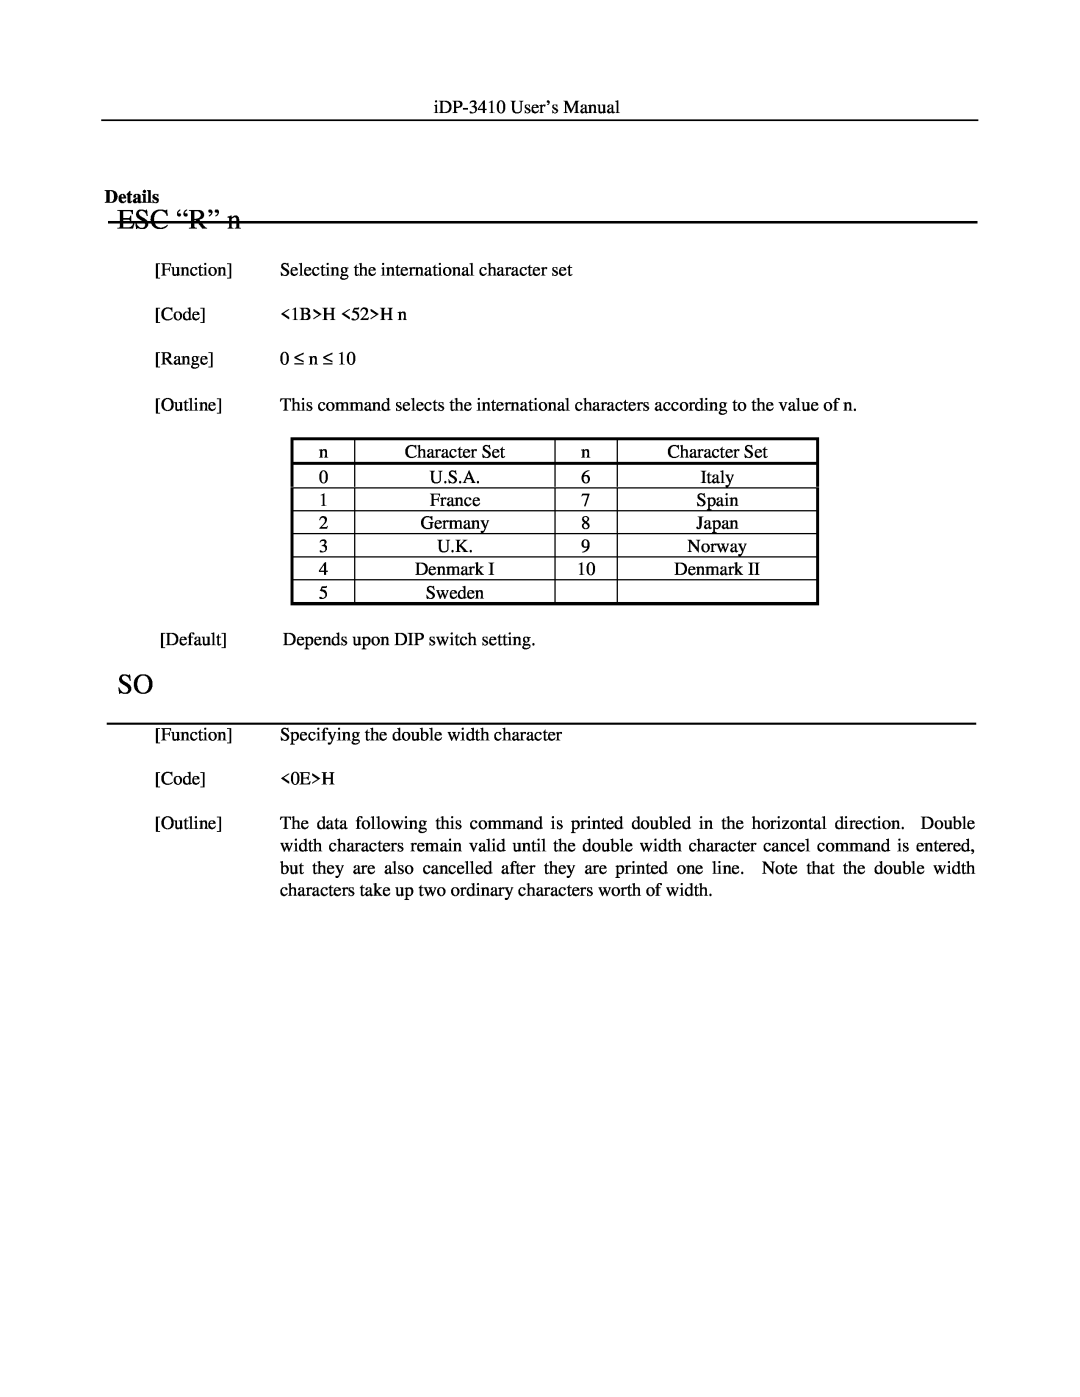 Addlogix iDP-3410 user manual ESC “R” n, Details 